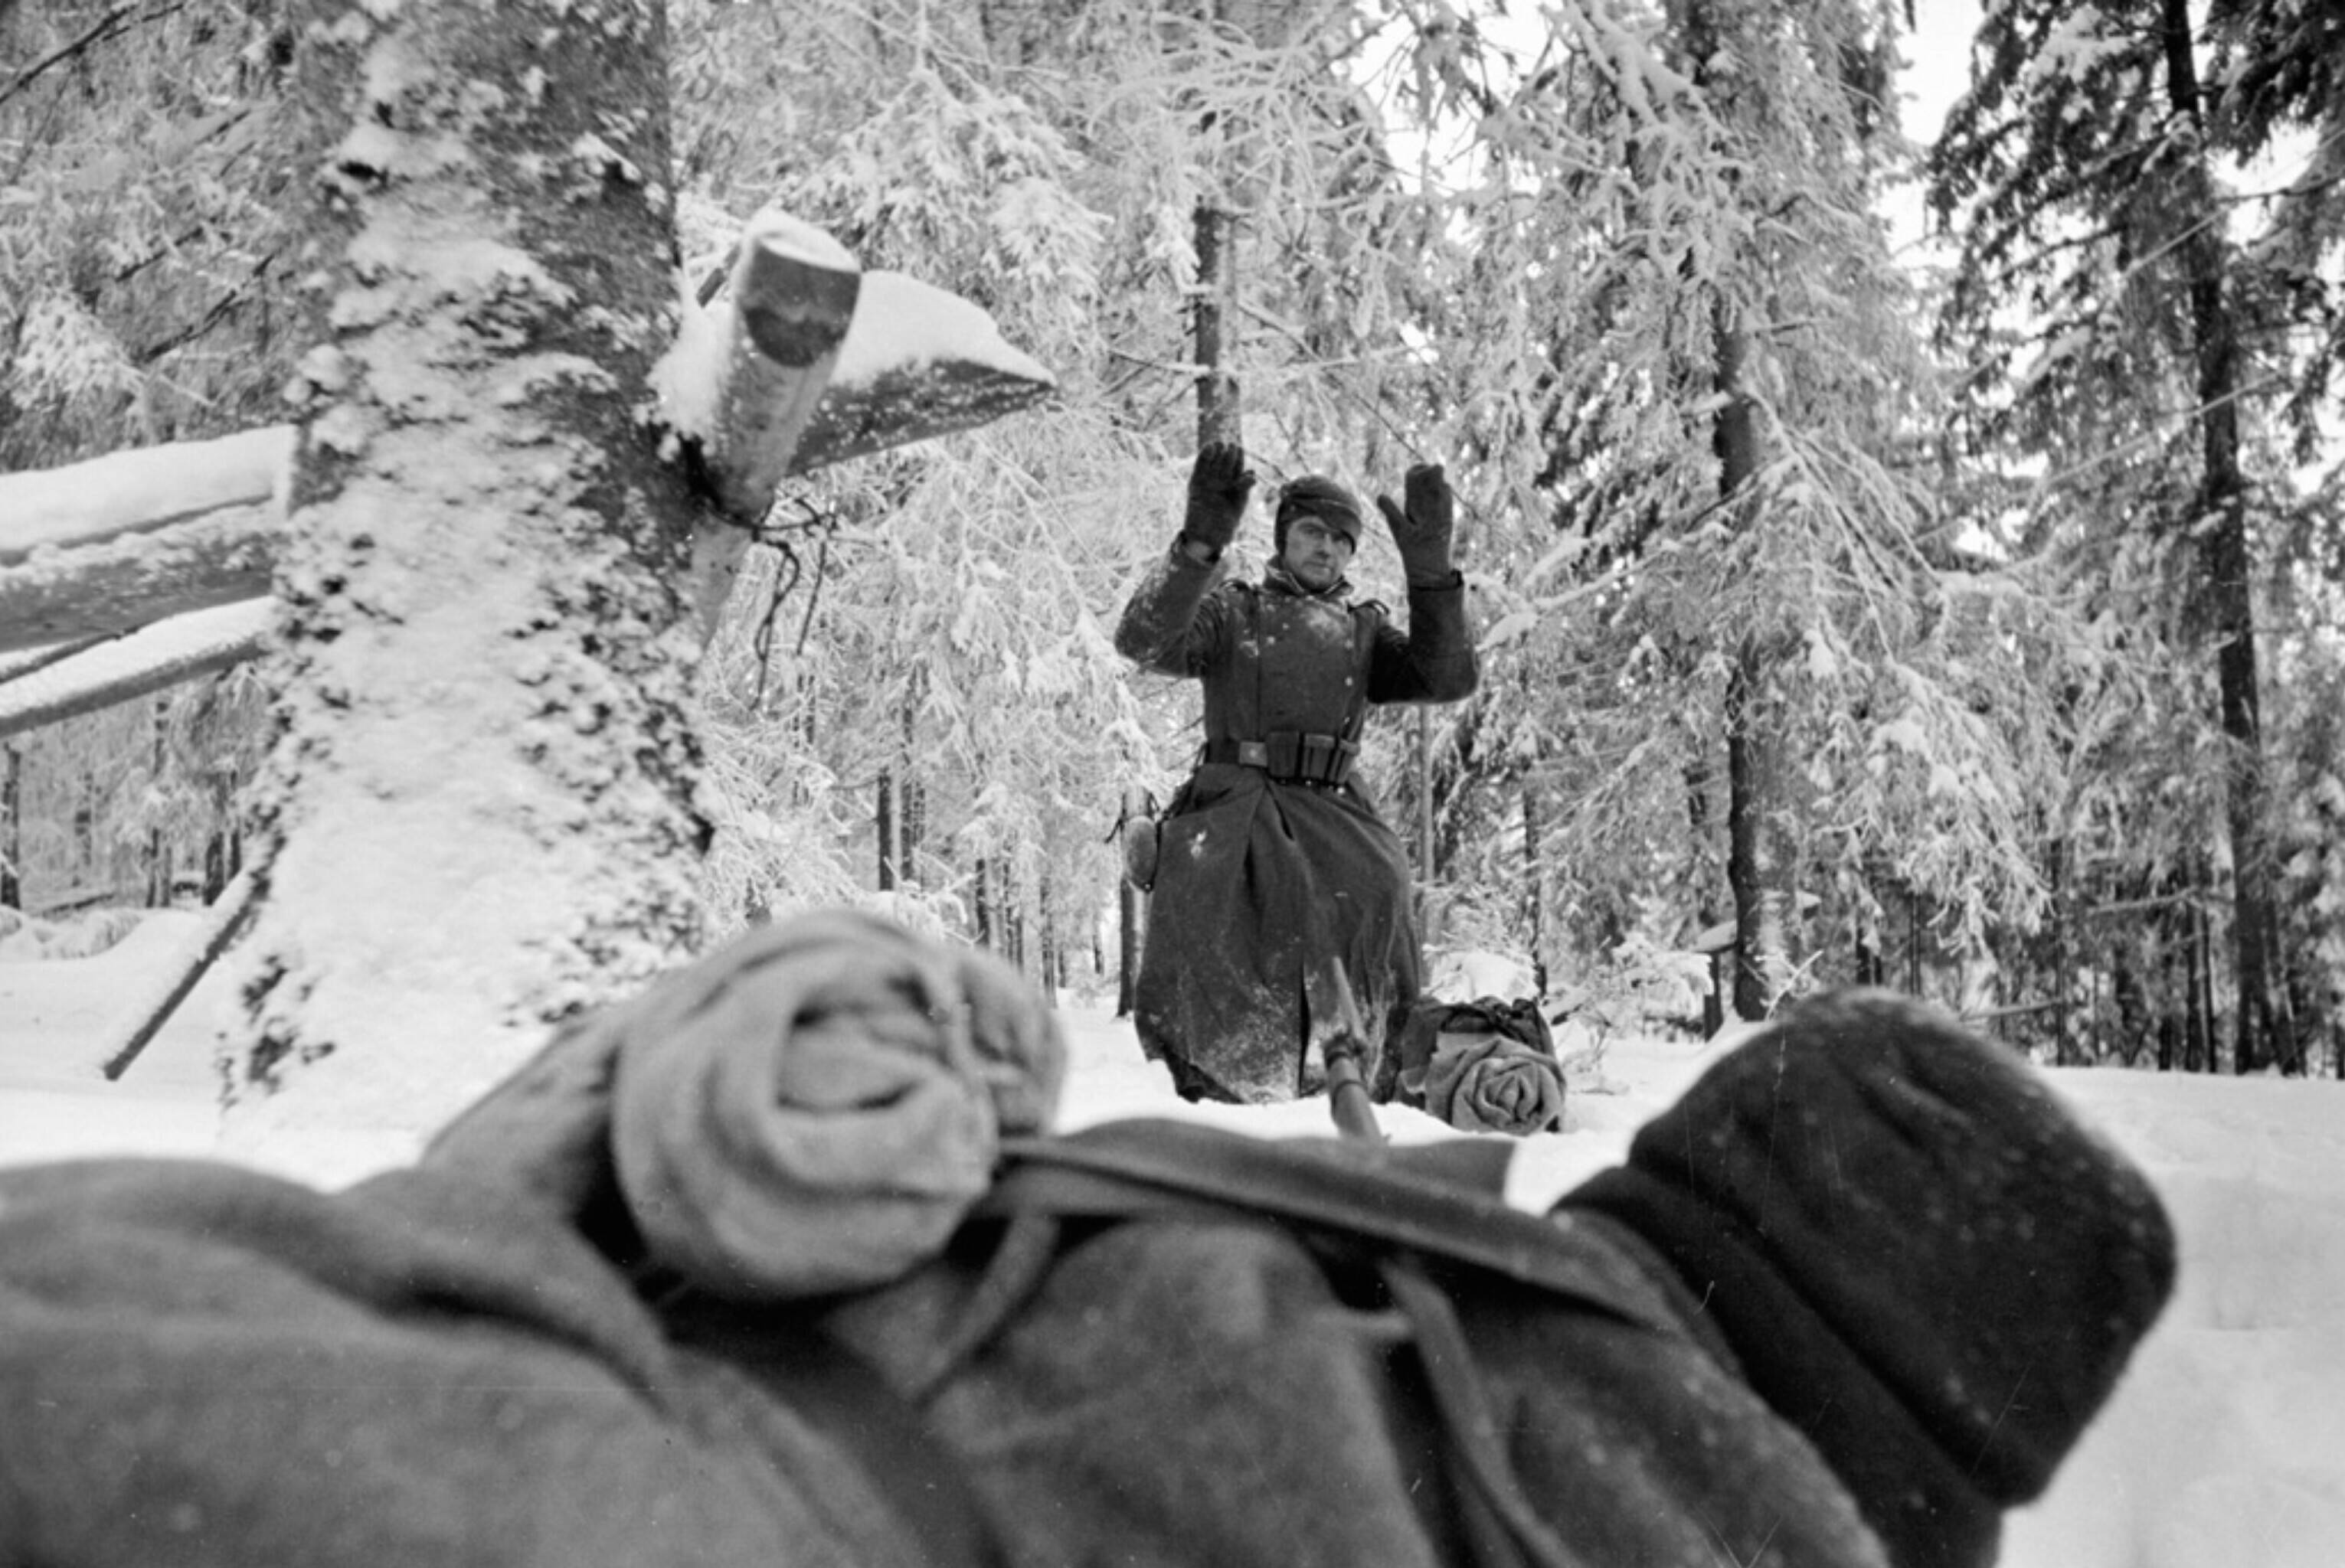 Немец выходит из леса с поднятыми вверх руками (RIA Novosti archive, image #603 / Samaryi Guraryi / CC-BY-SA 3.0)